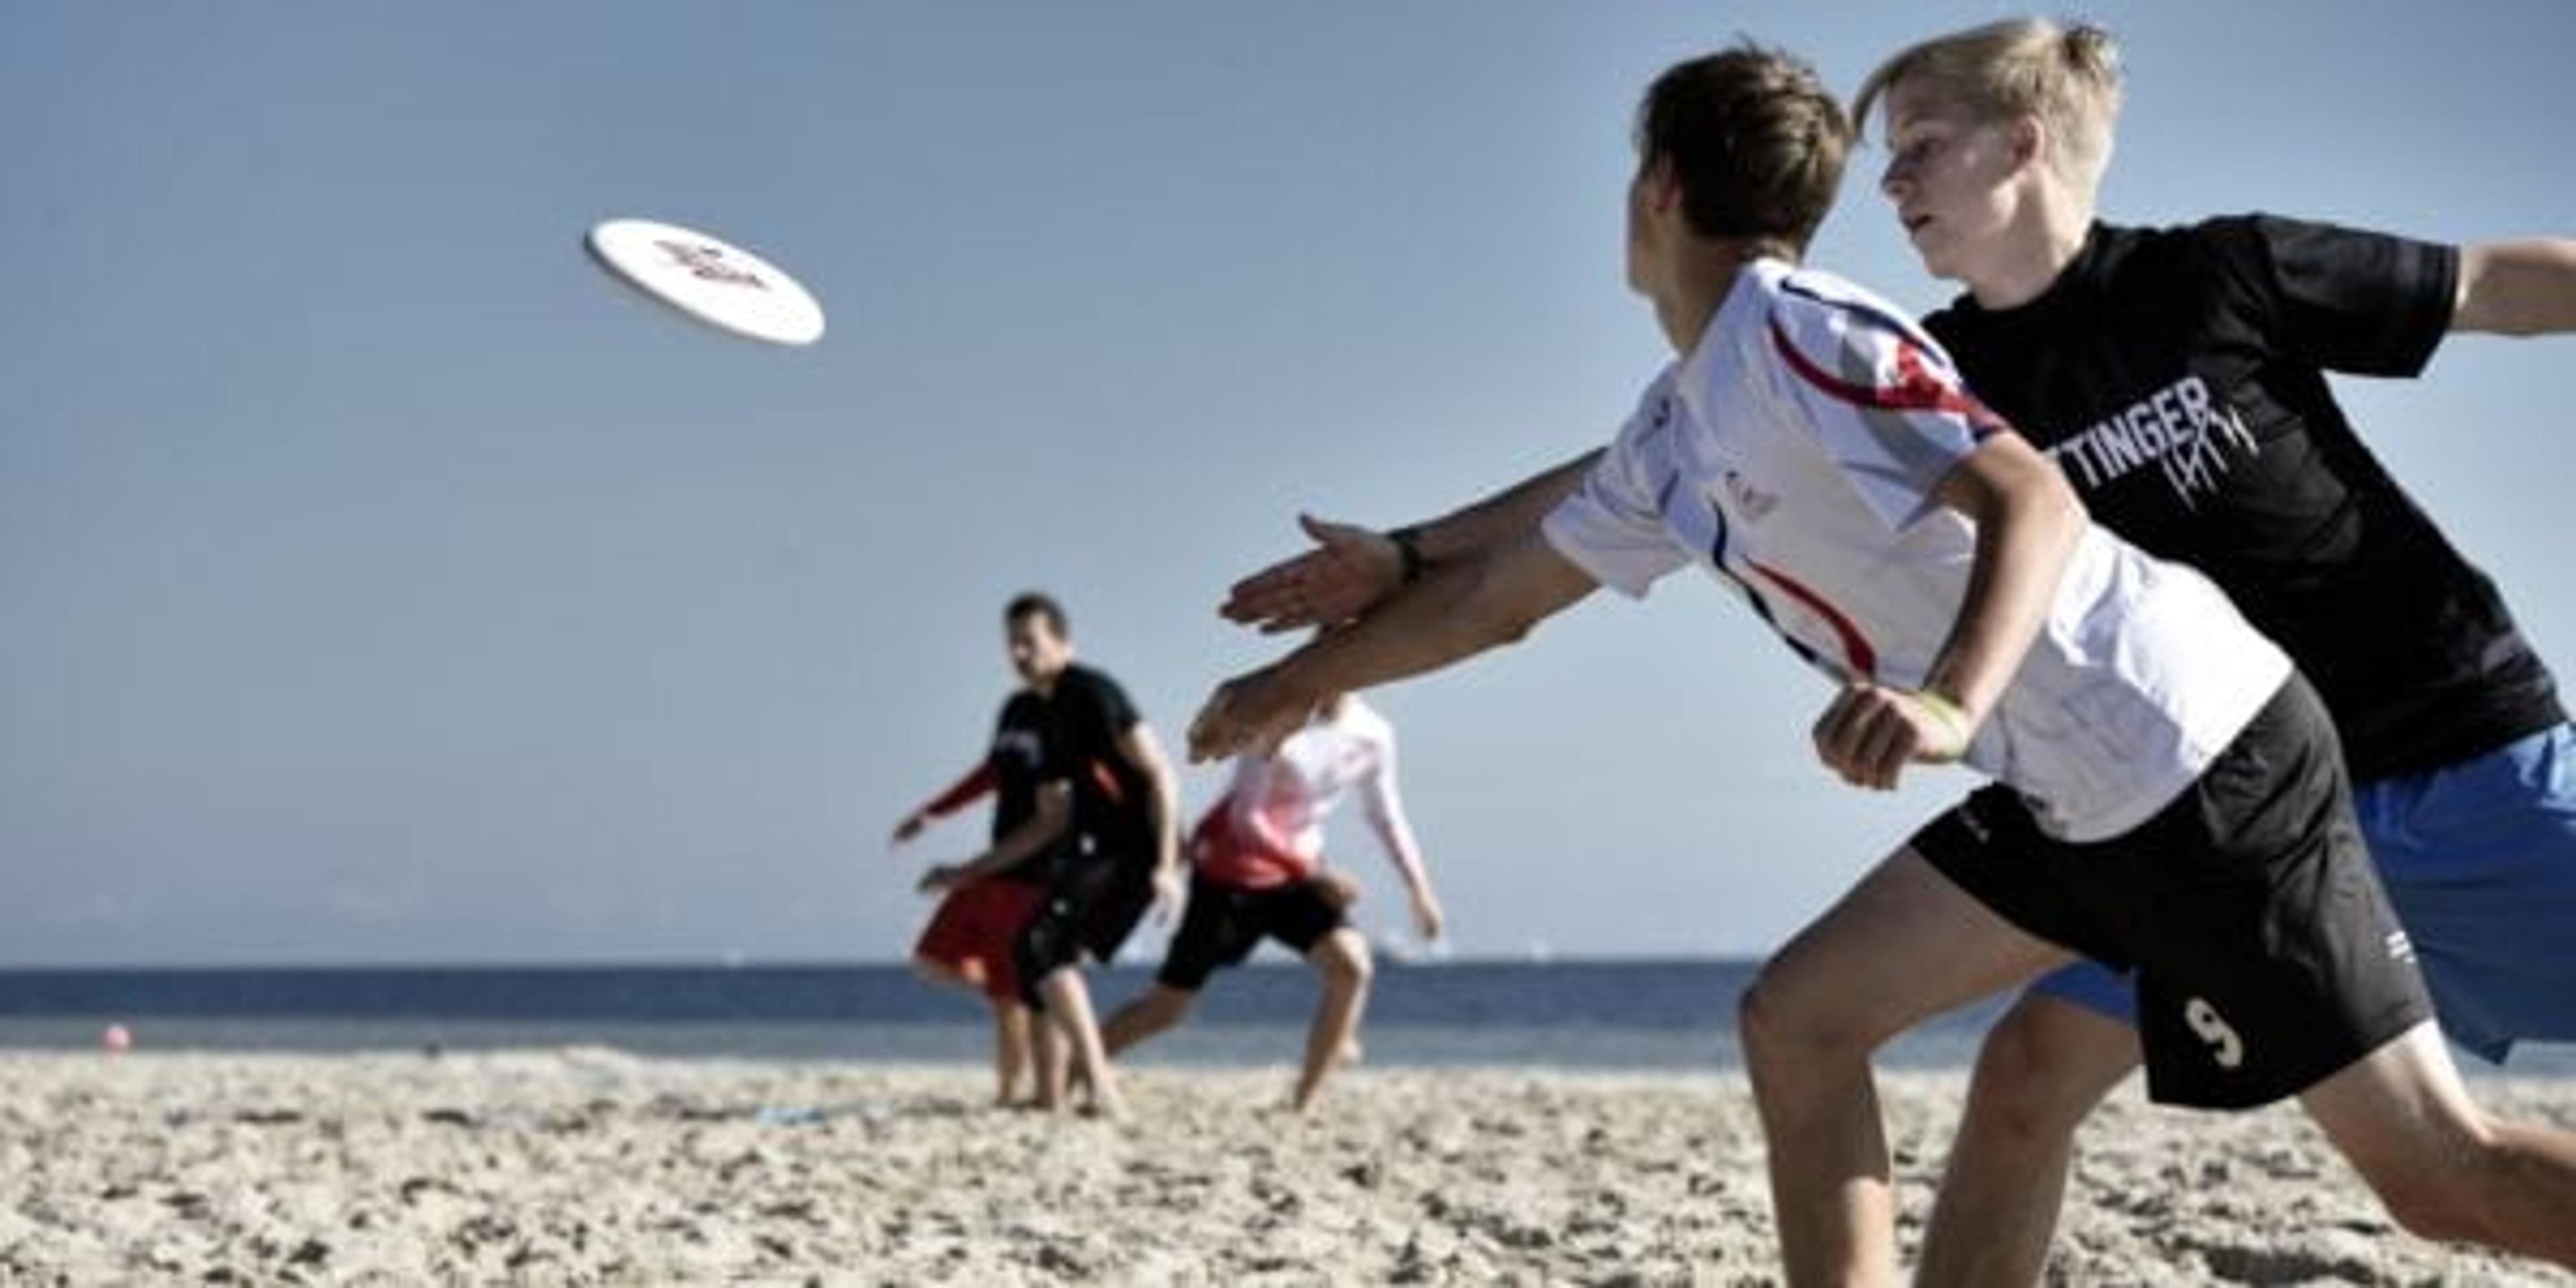 boys playing frisbee on a beach